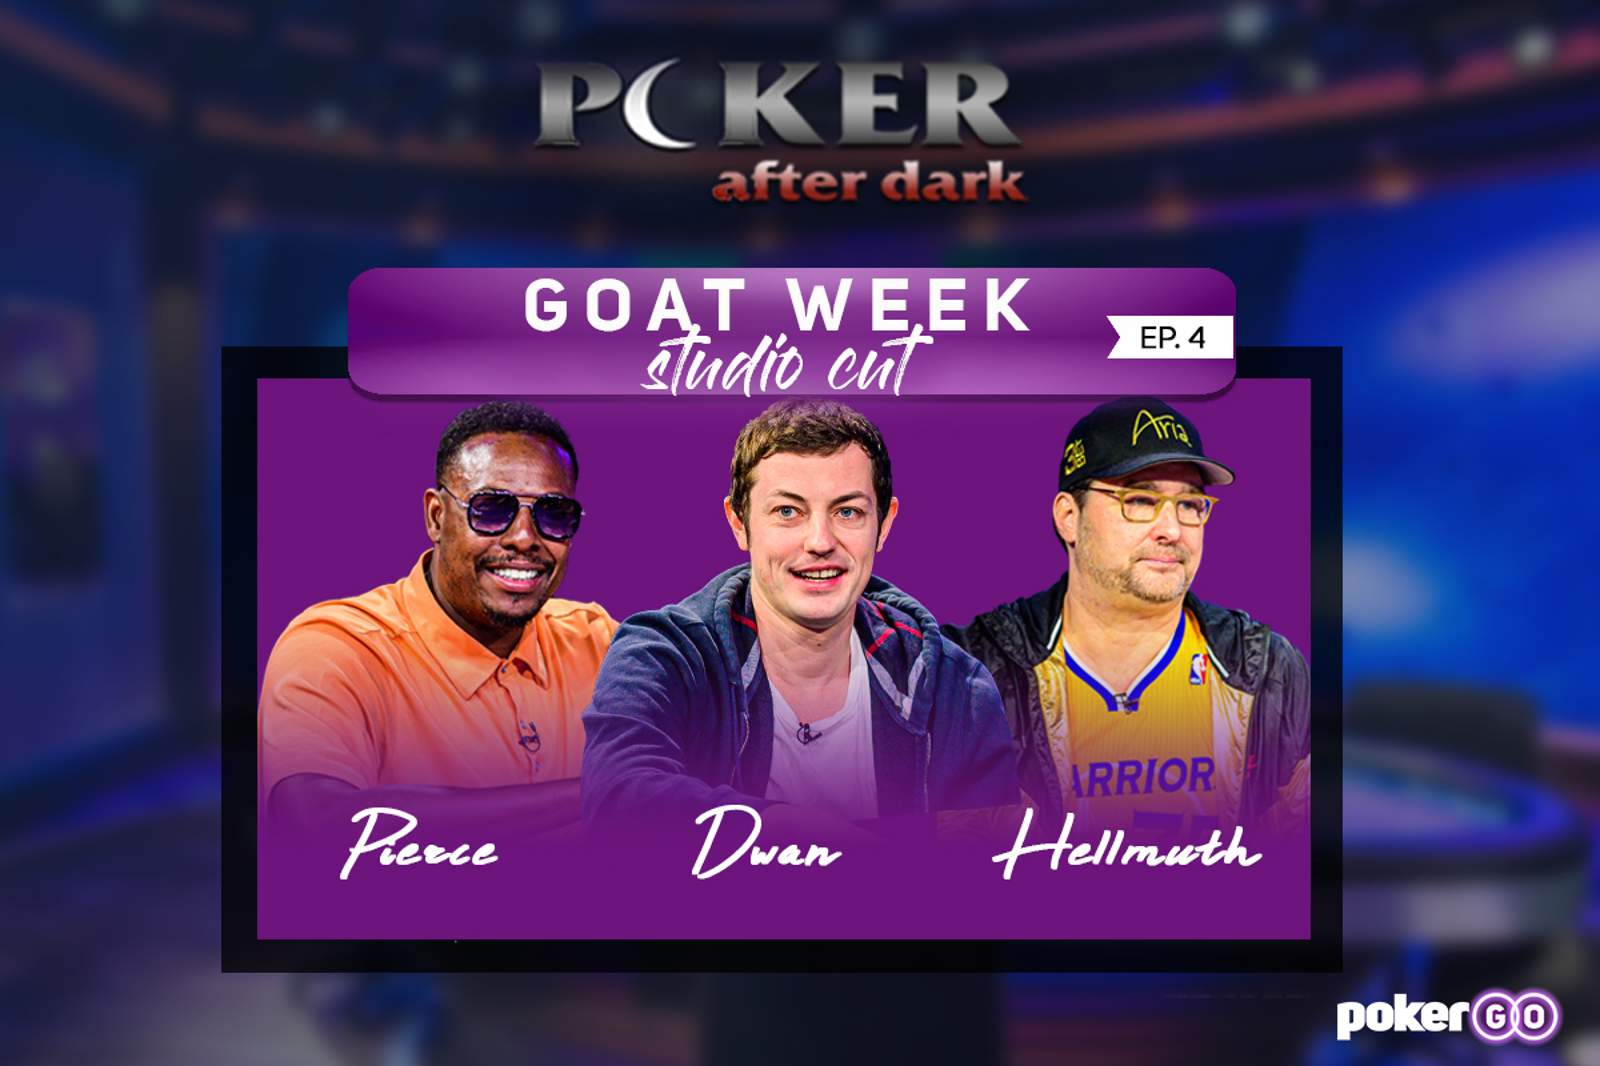 Poker After Dark Studio Cut Episode 4 on Tonight at 9 p.m. ET